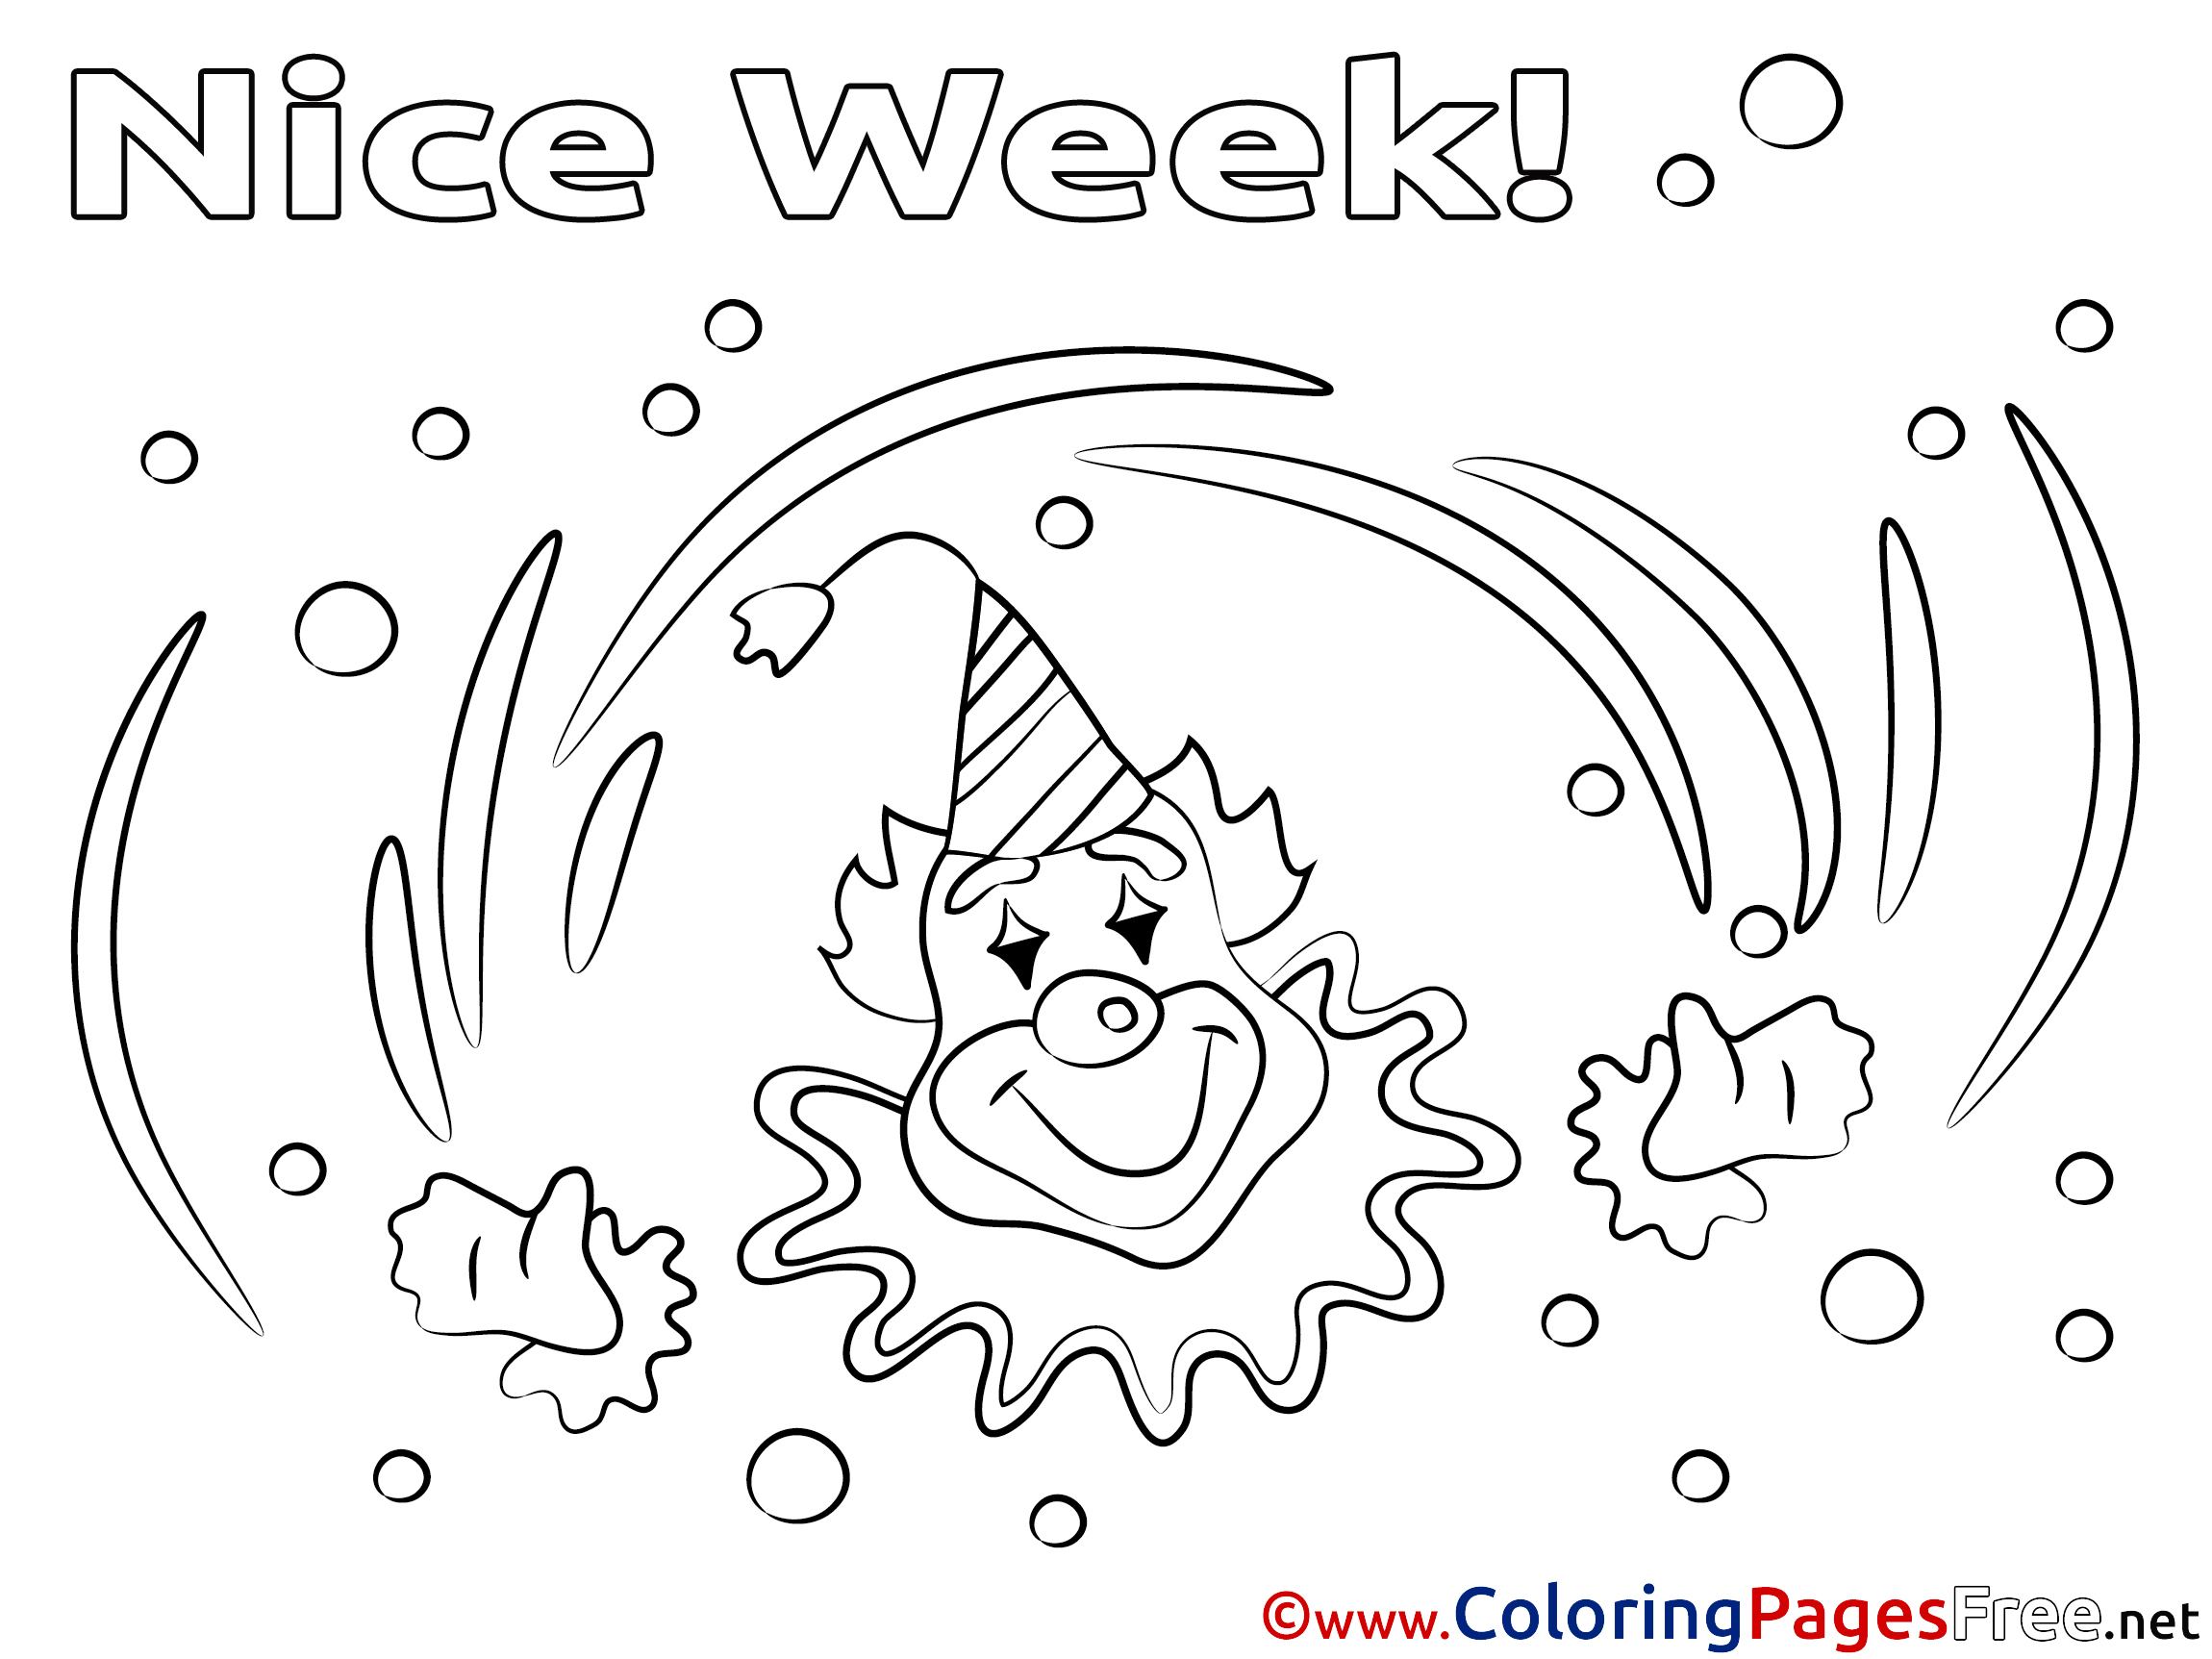 Clown Nice Week Coloring Pages free